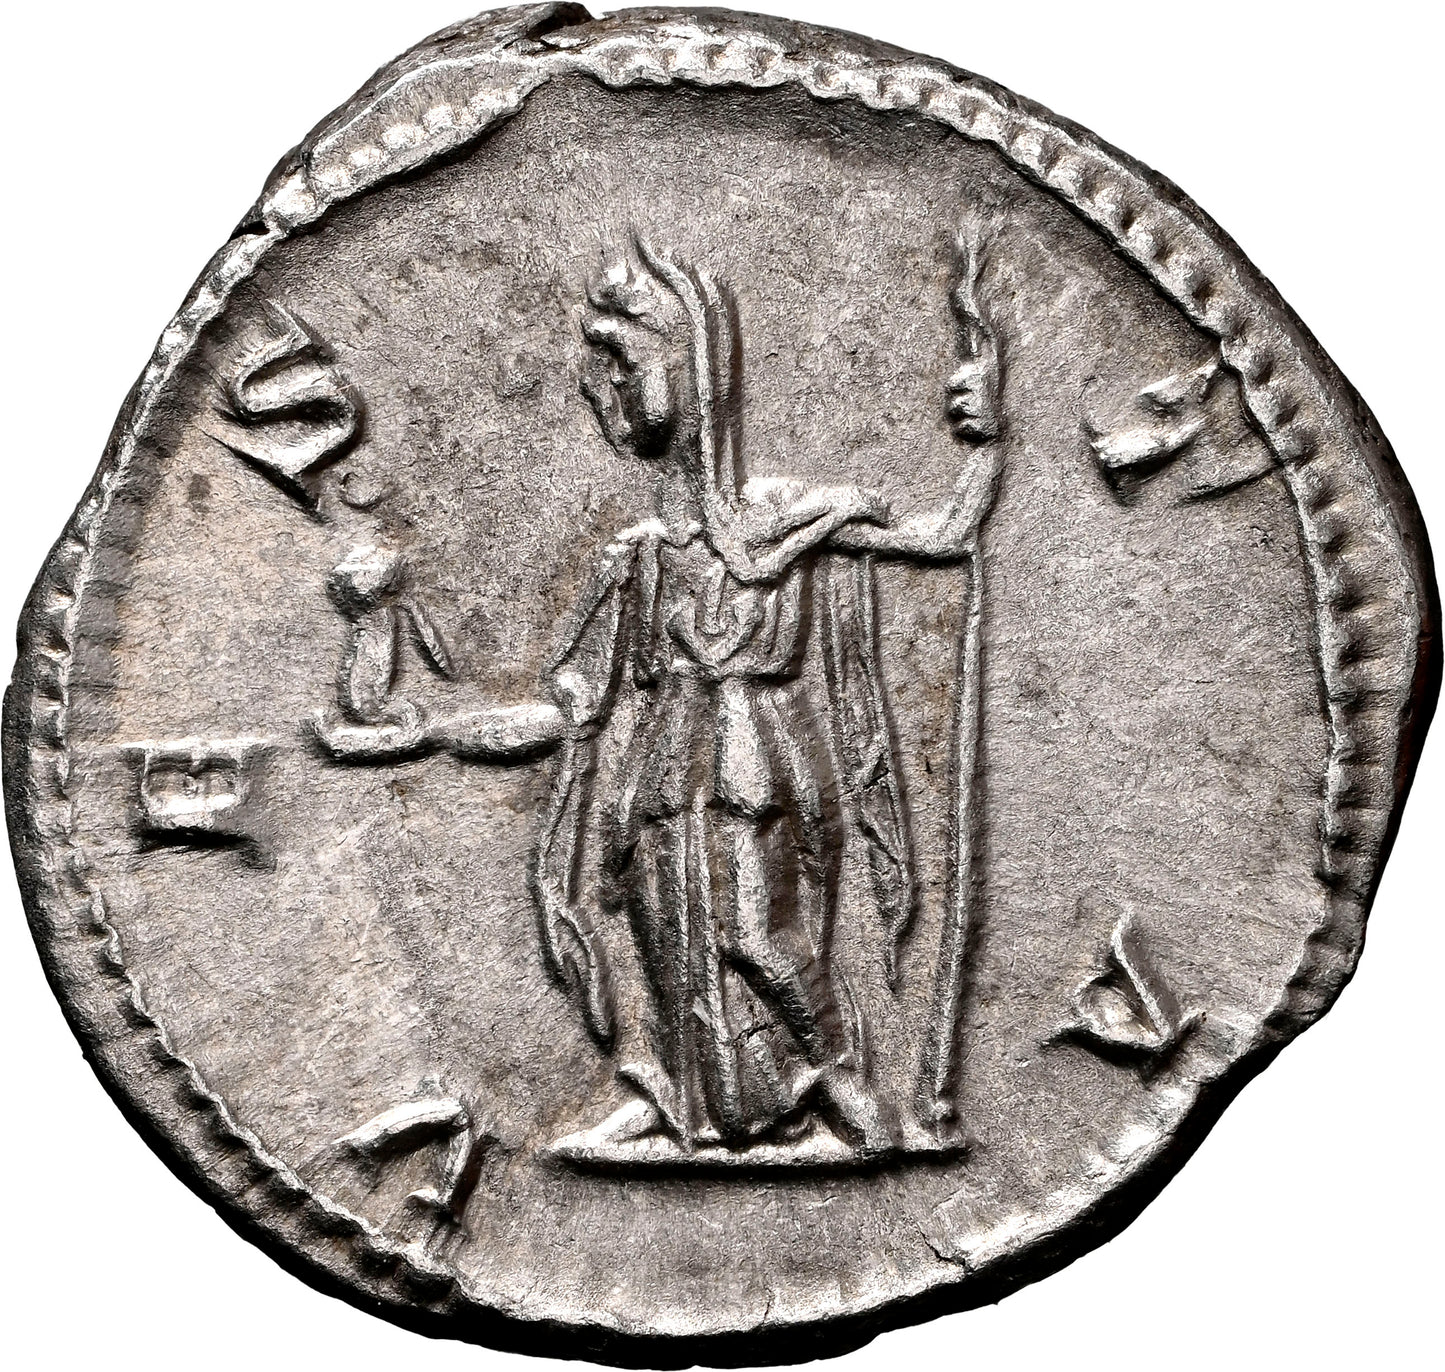 Roman Empire - Julia Domna - Silver Denarius - NGC AU - RIC:390